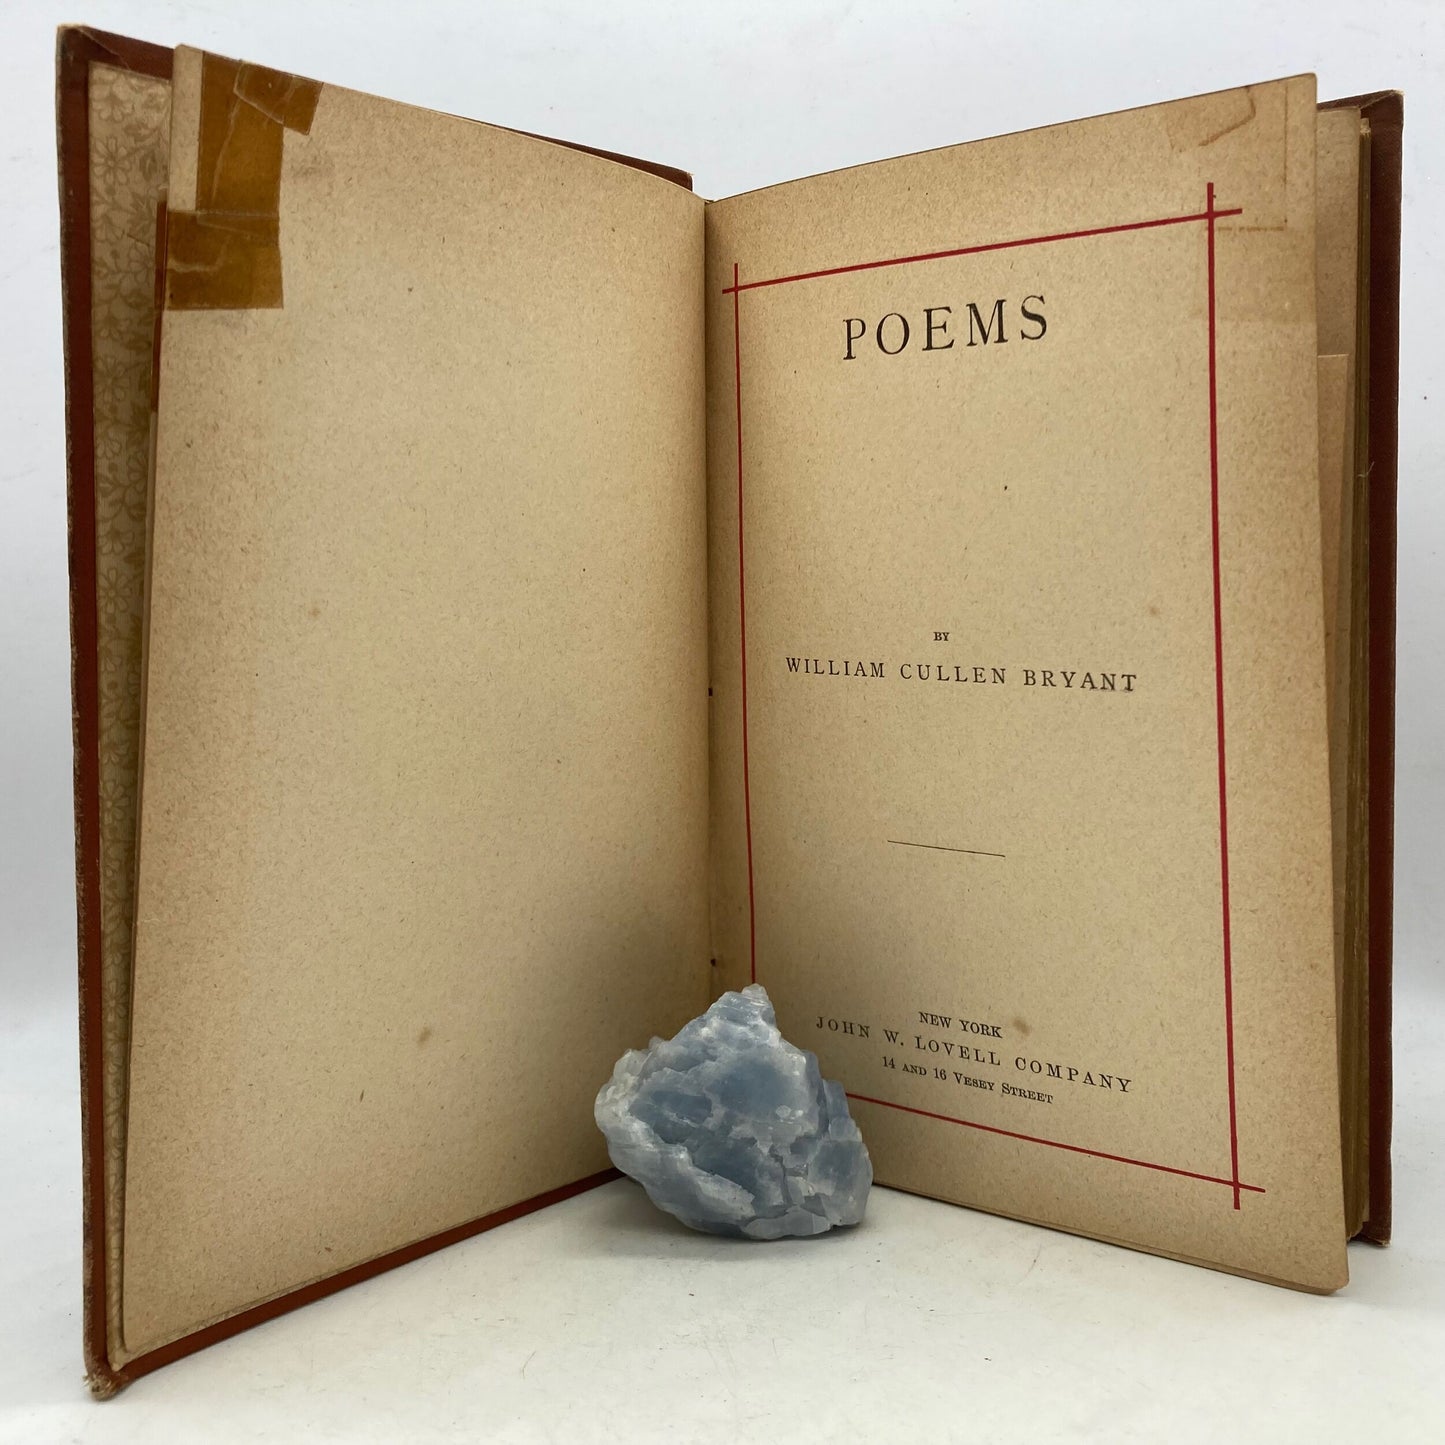 BRYANT, William Cullen "Poems" [John W. Lovell, c1880] - Buzz Bookstore